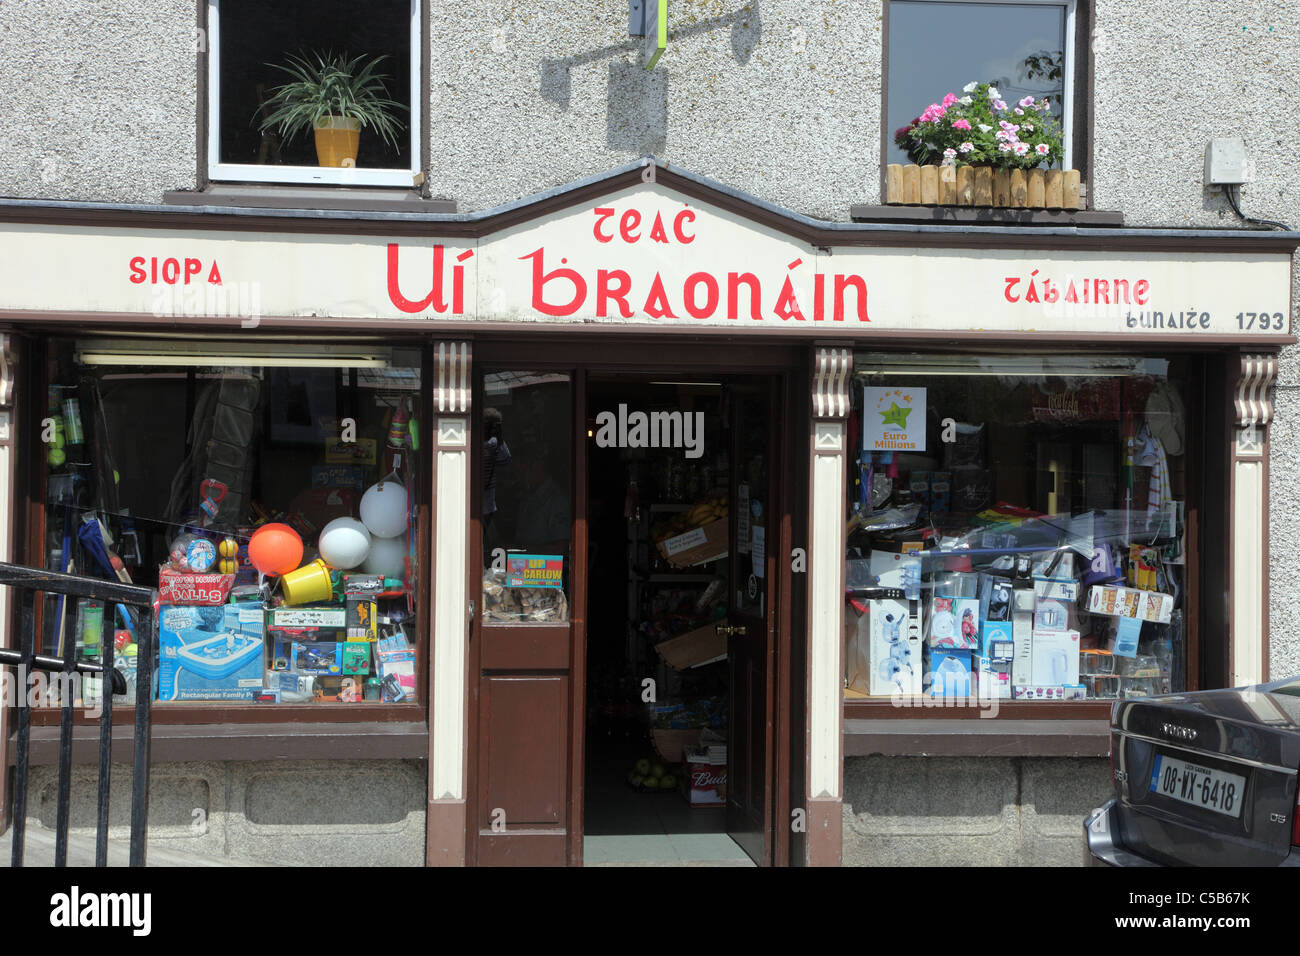 Irish village shop with shop sign in Irish, Leighlinbridge, Co. Carlow, Ireland Stock Photo